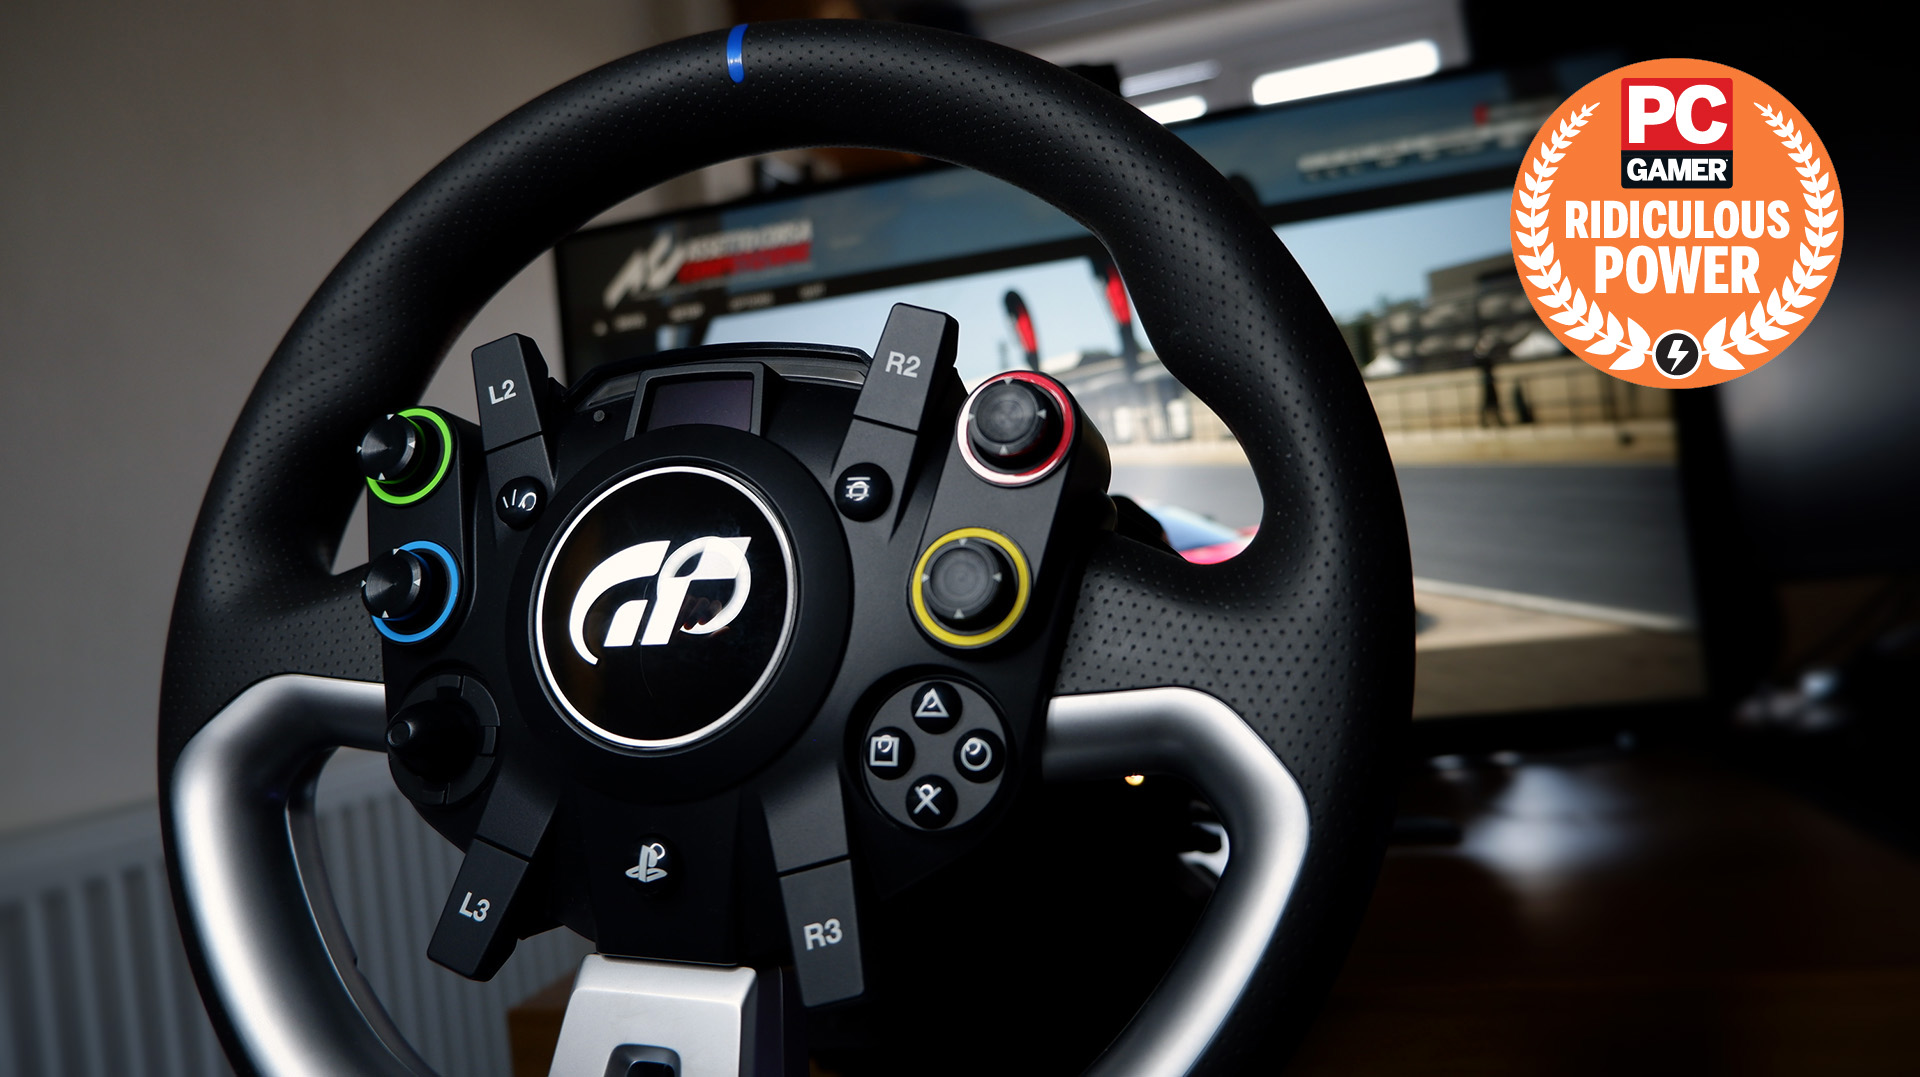 Fanatec Gran Turismo DD Pro racing wheel review | PC Gamer